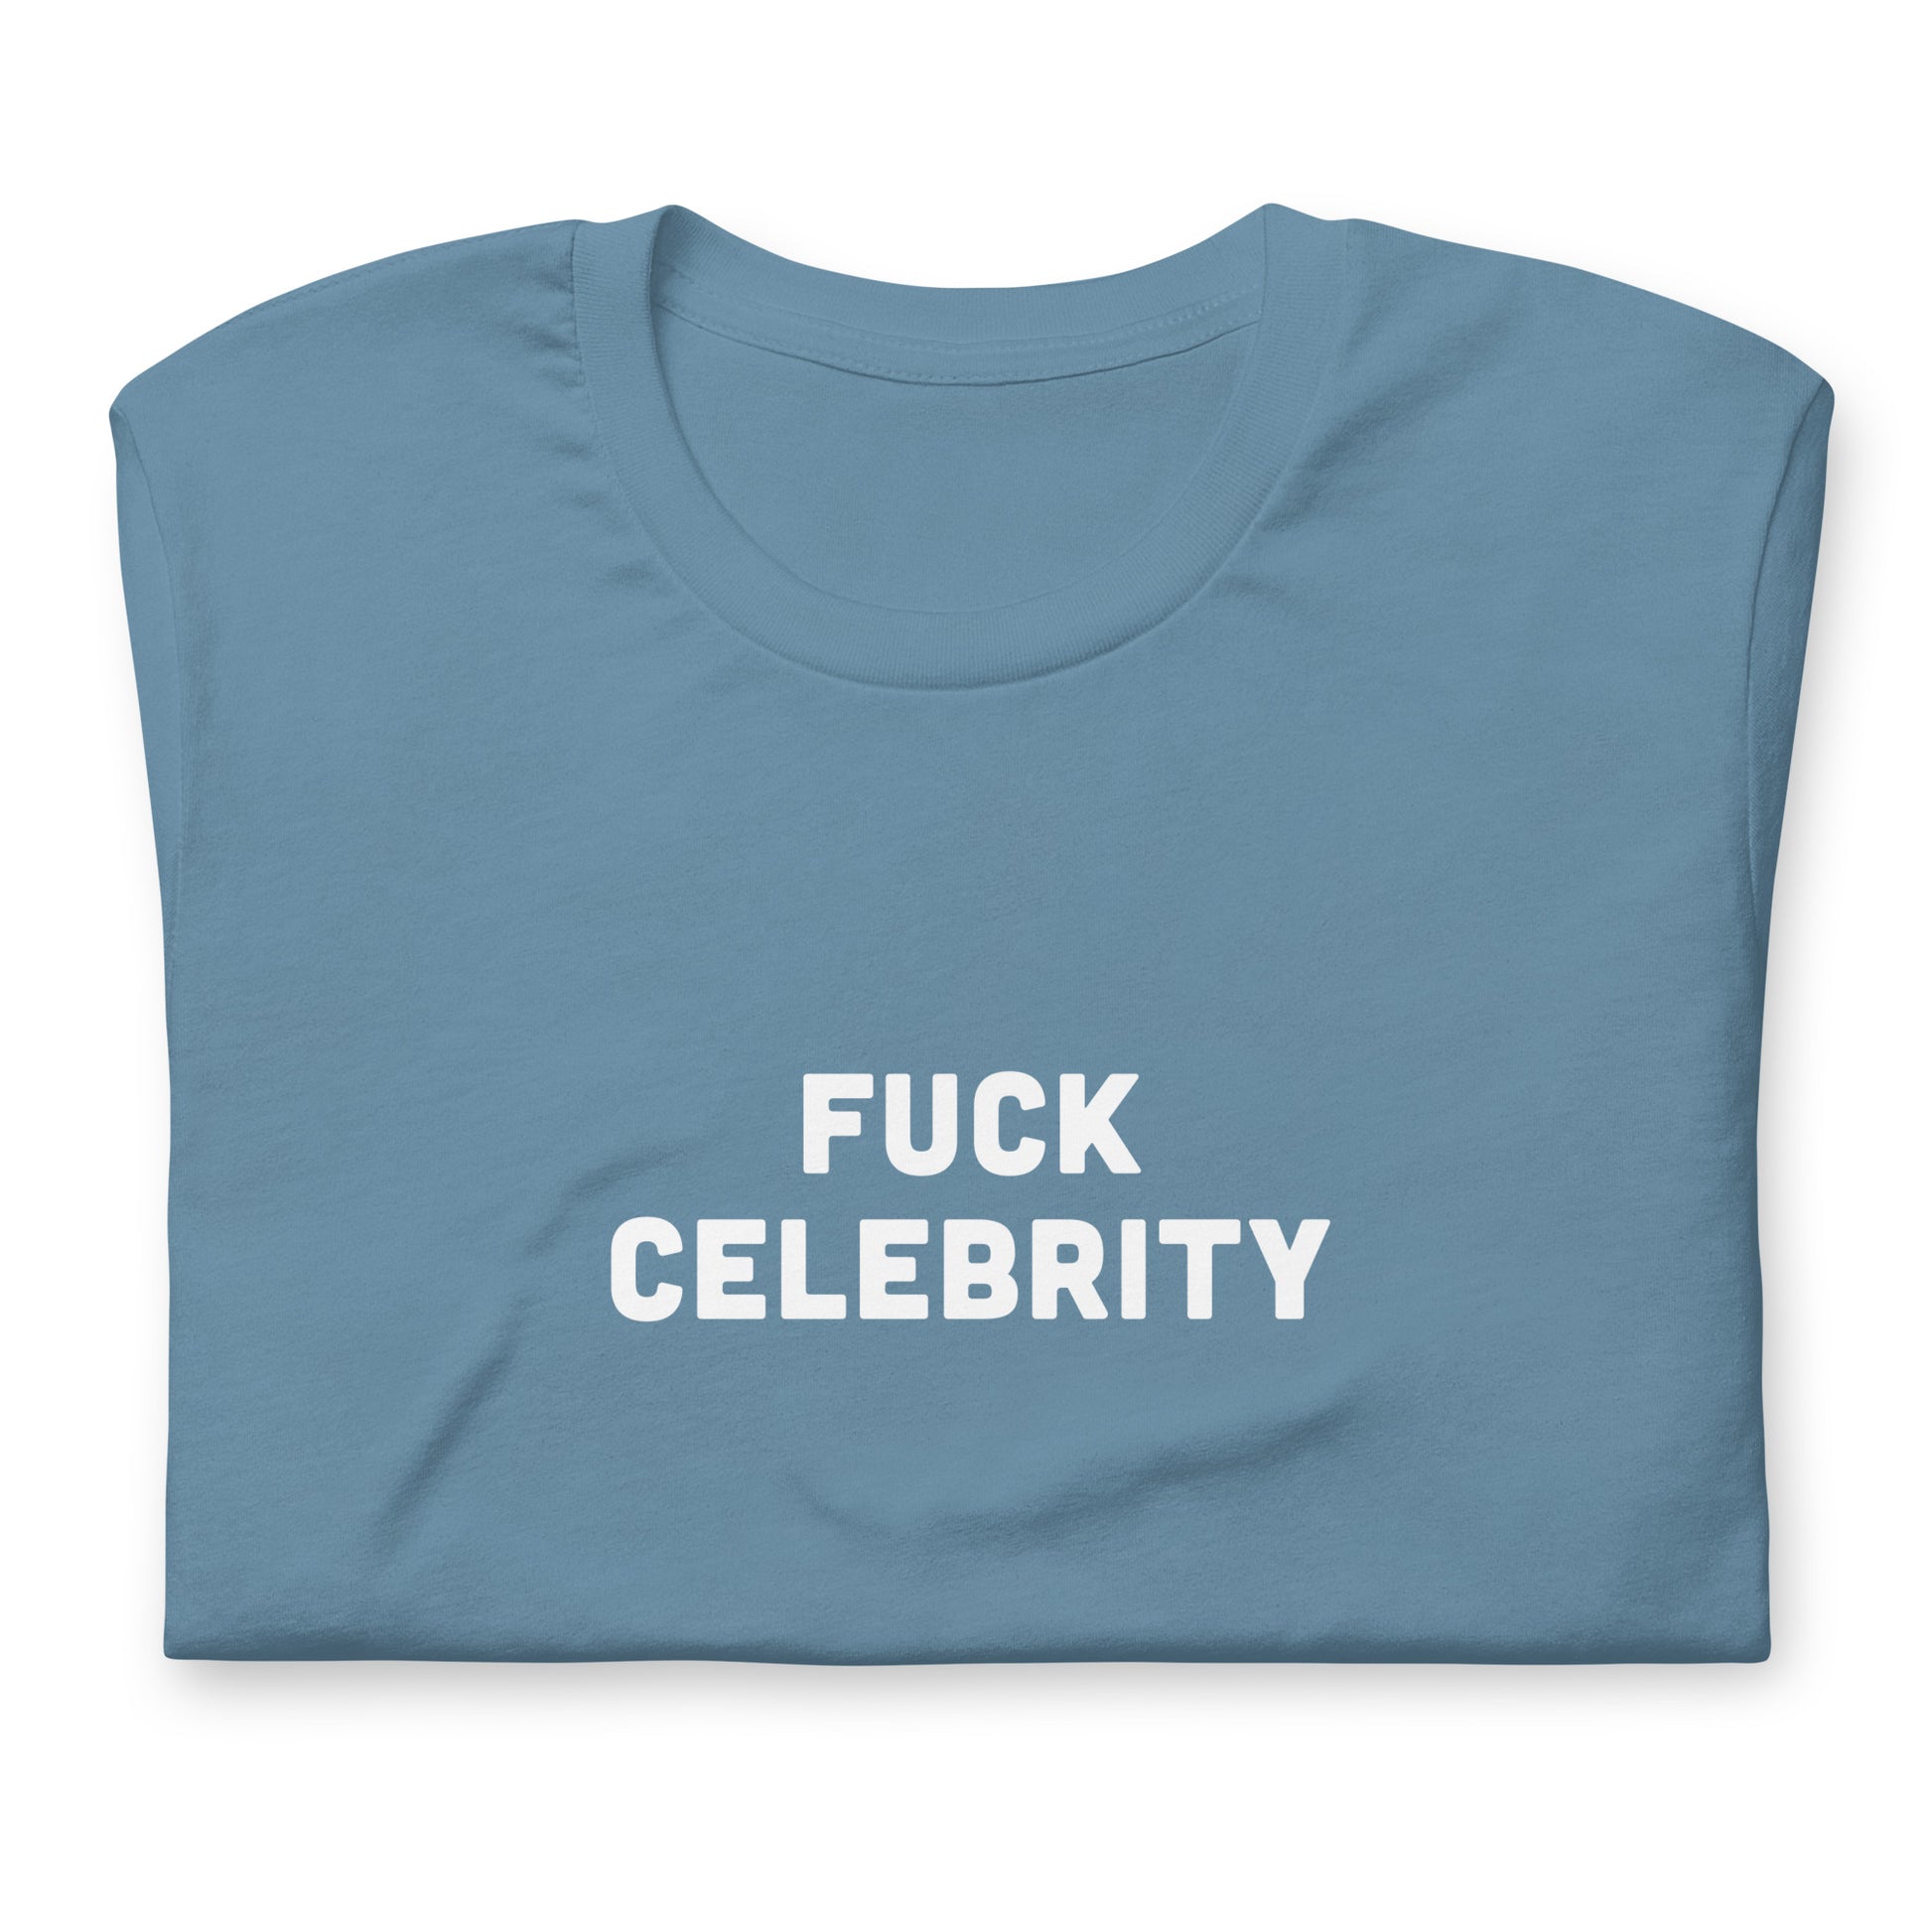 Fuck Celebrity T-Shirt Size M Color Forest